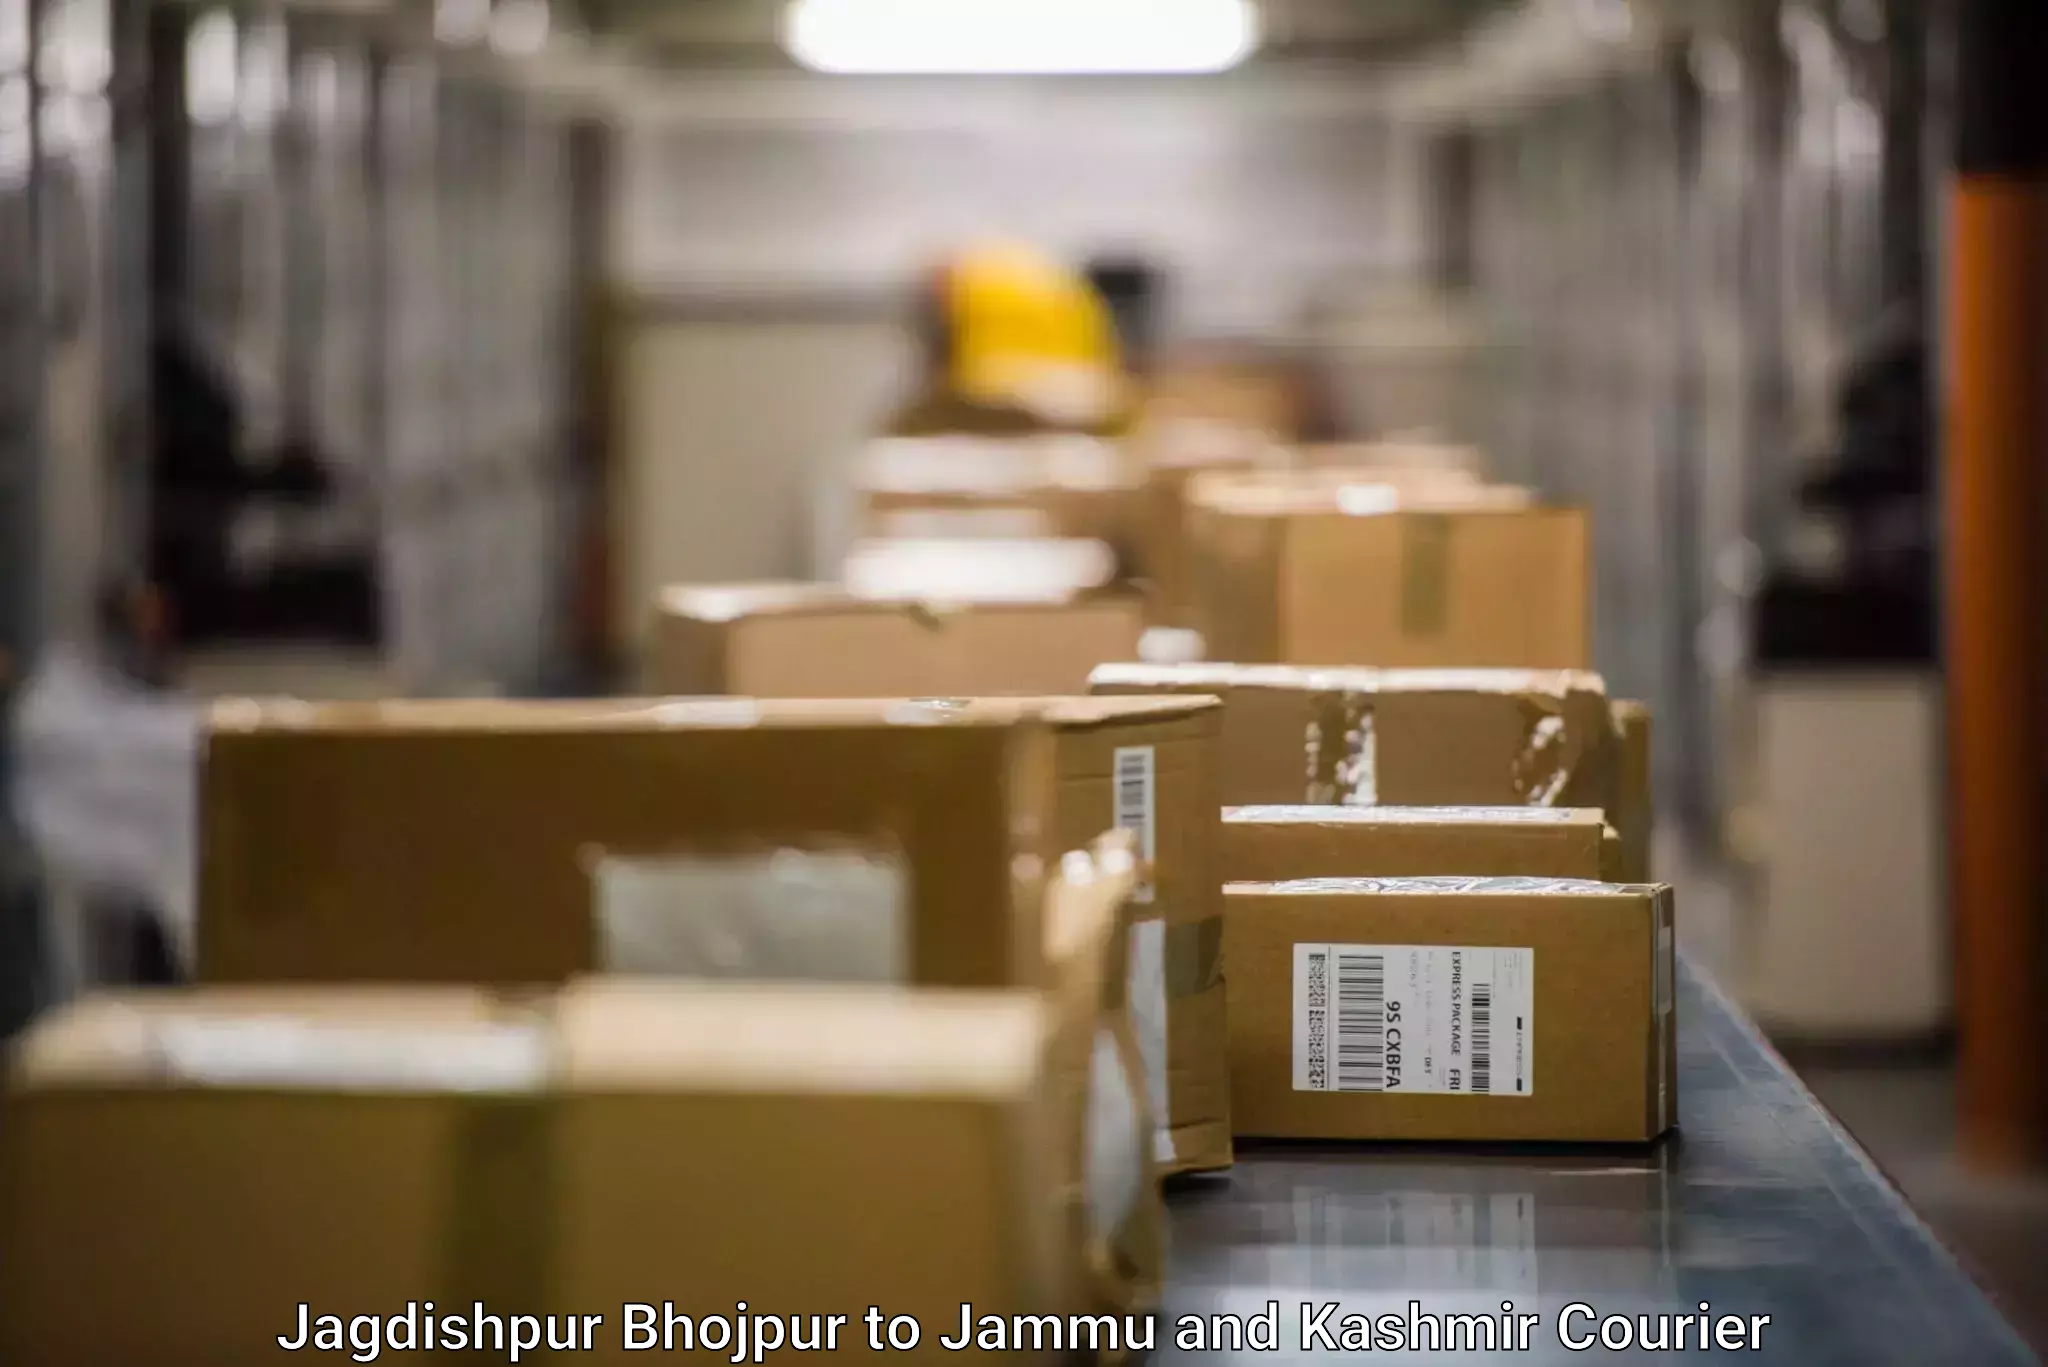 Shipping and handling Jagdishpur Bhojpur to Jammu and Kashmir